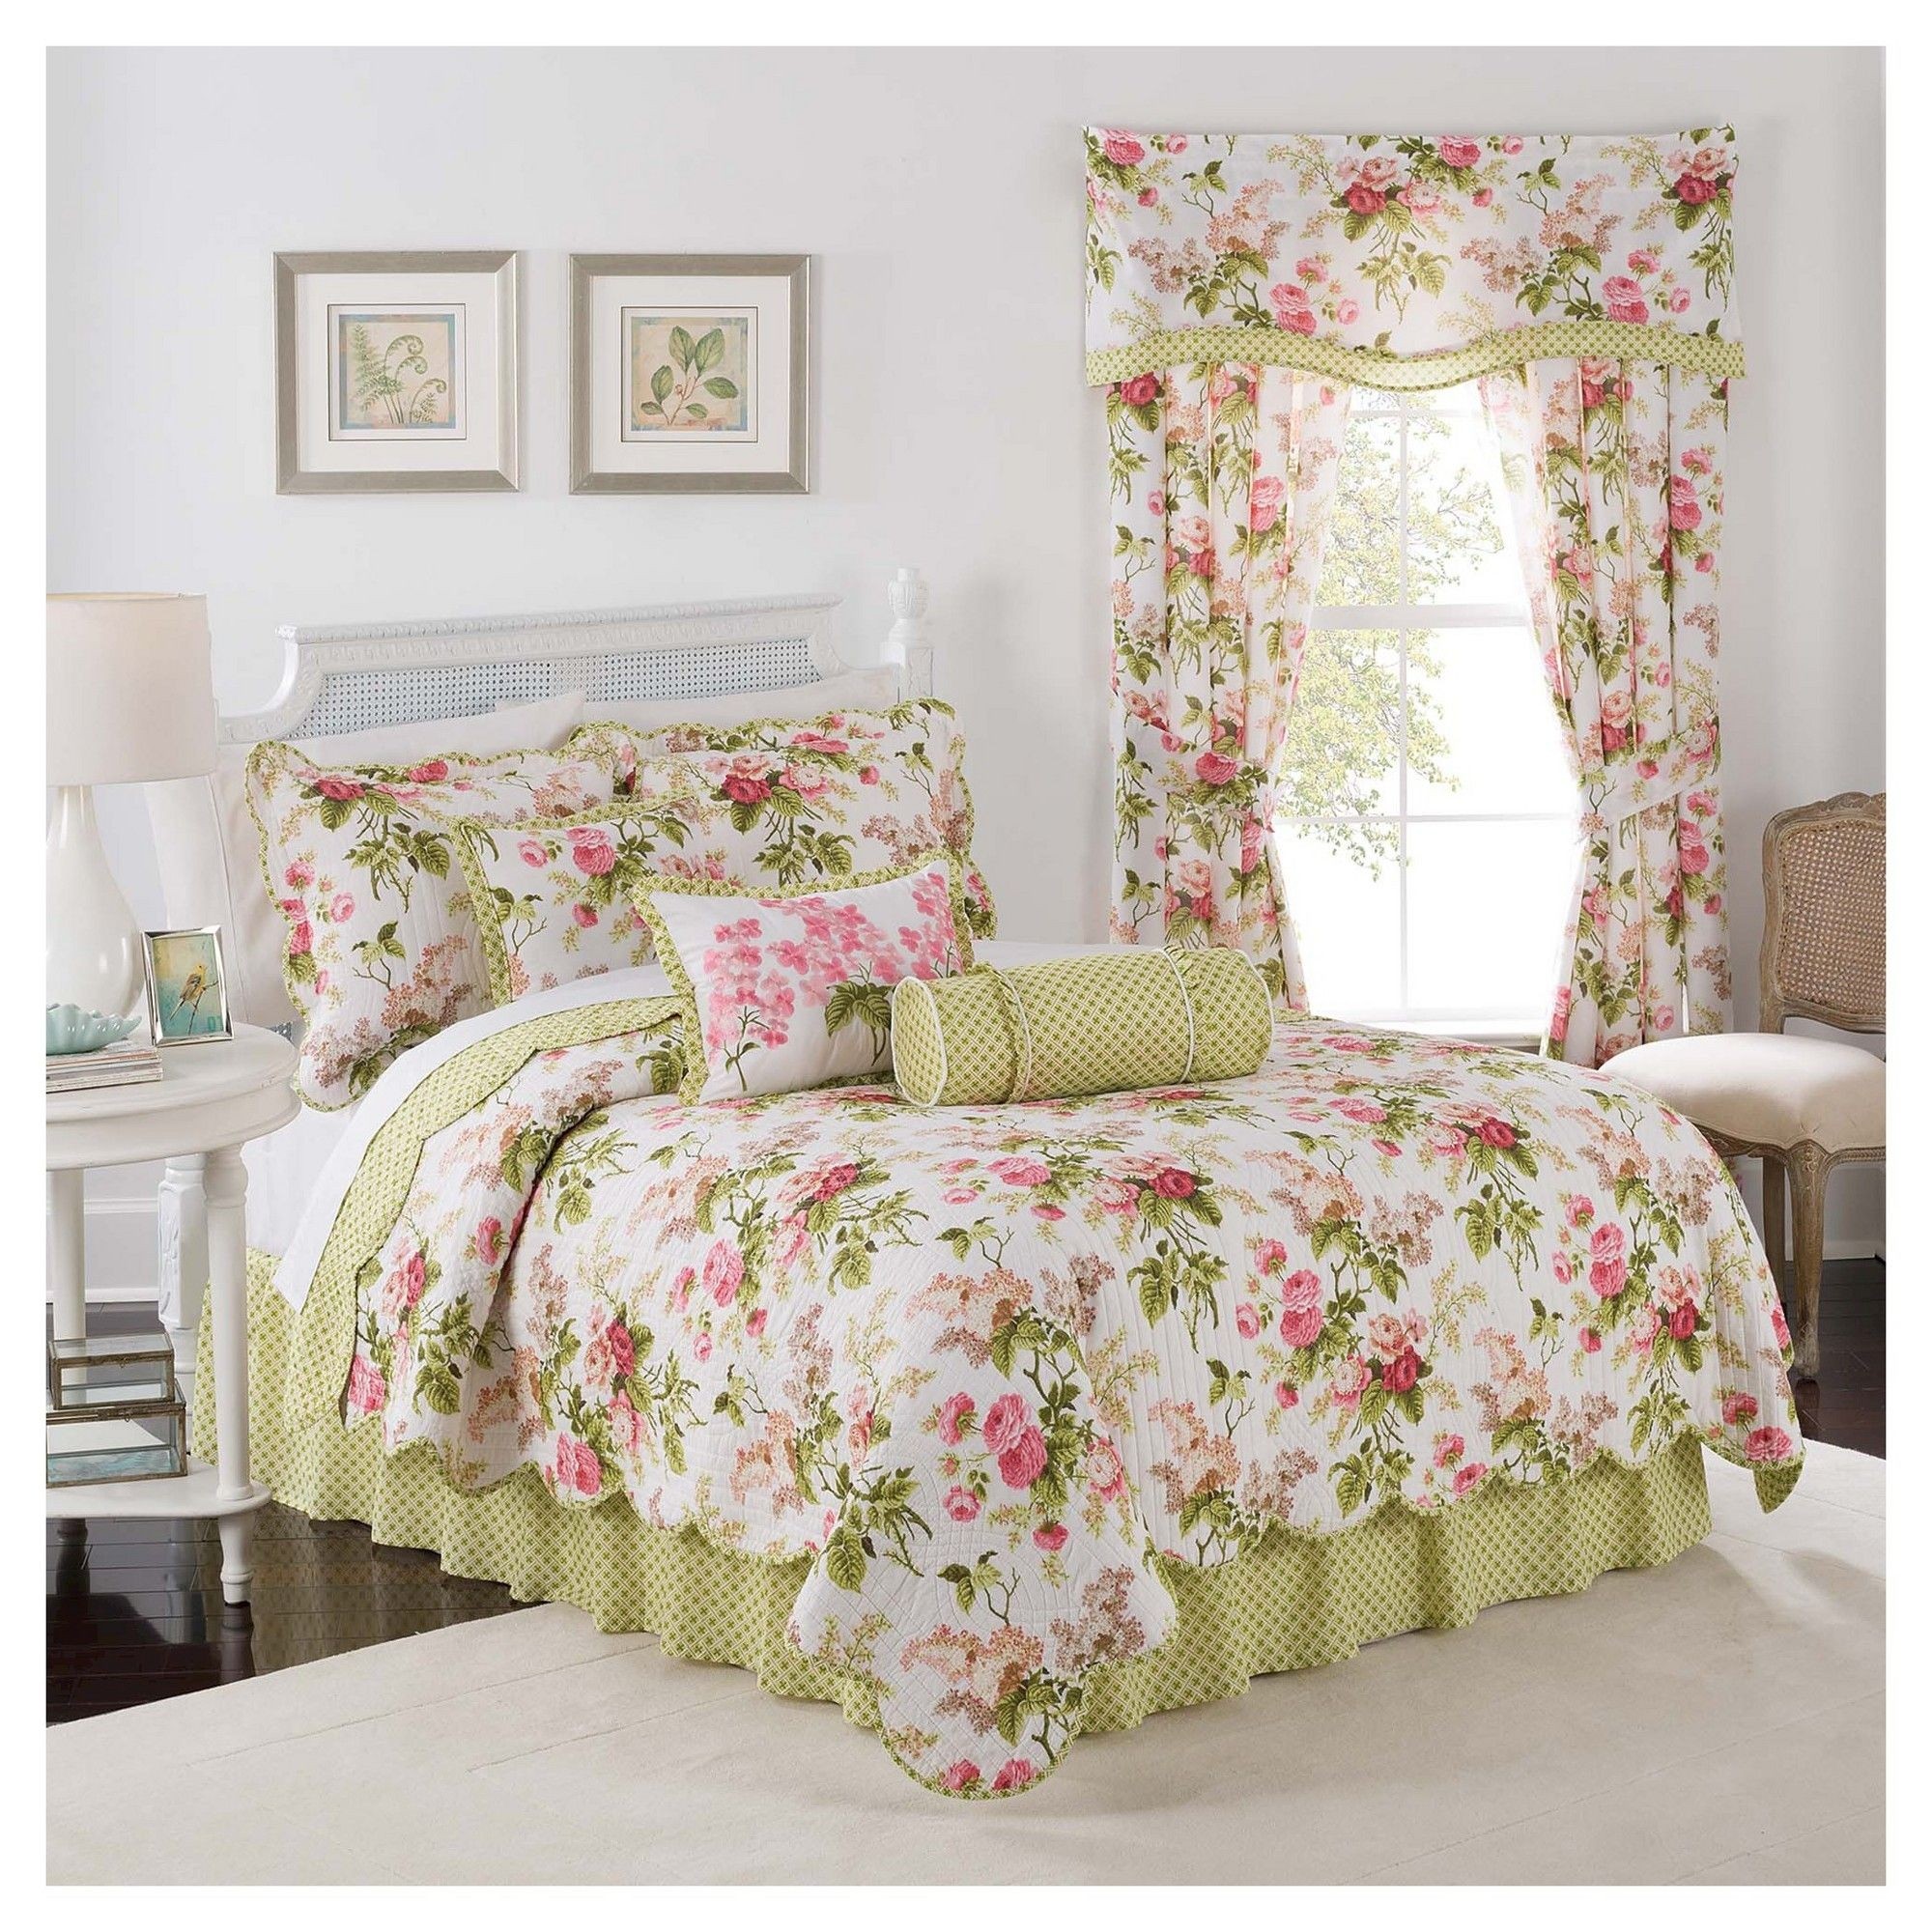 Emma's Garden Quilt Bedding Collection